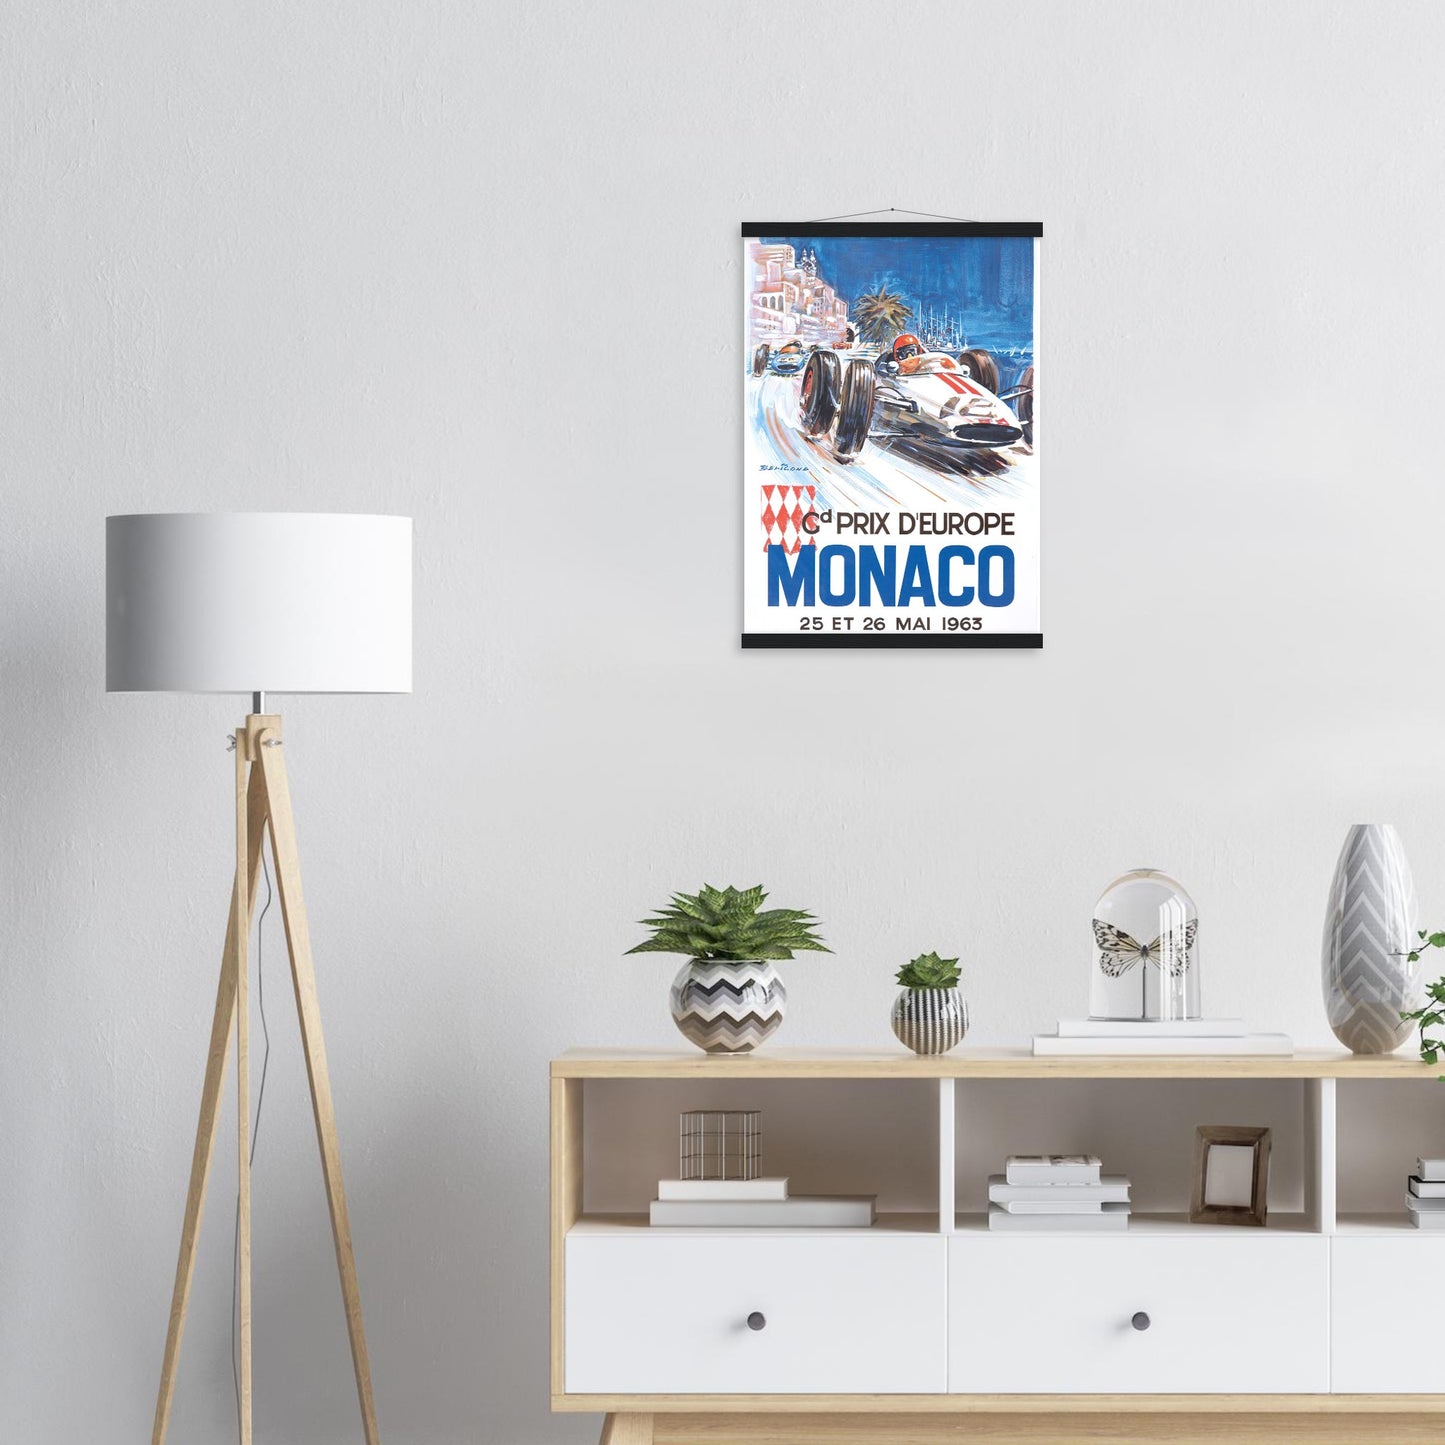 Monaco Grand Prix Vintage Poster Reprint on Premium Matte Paper